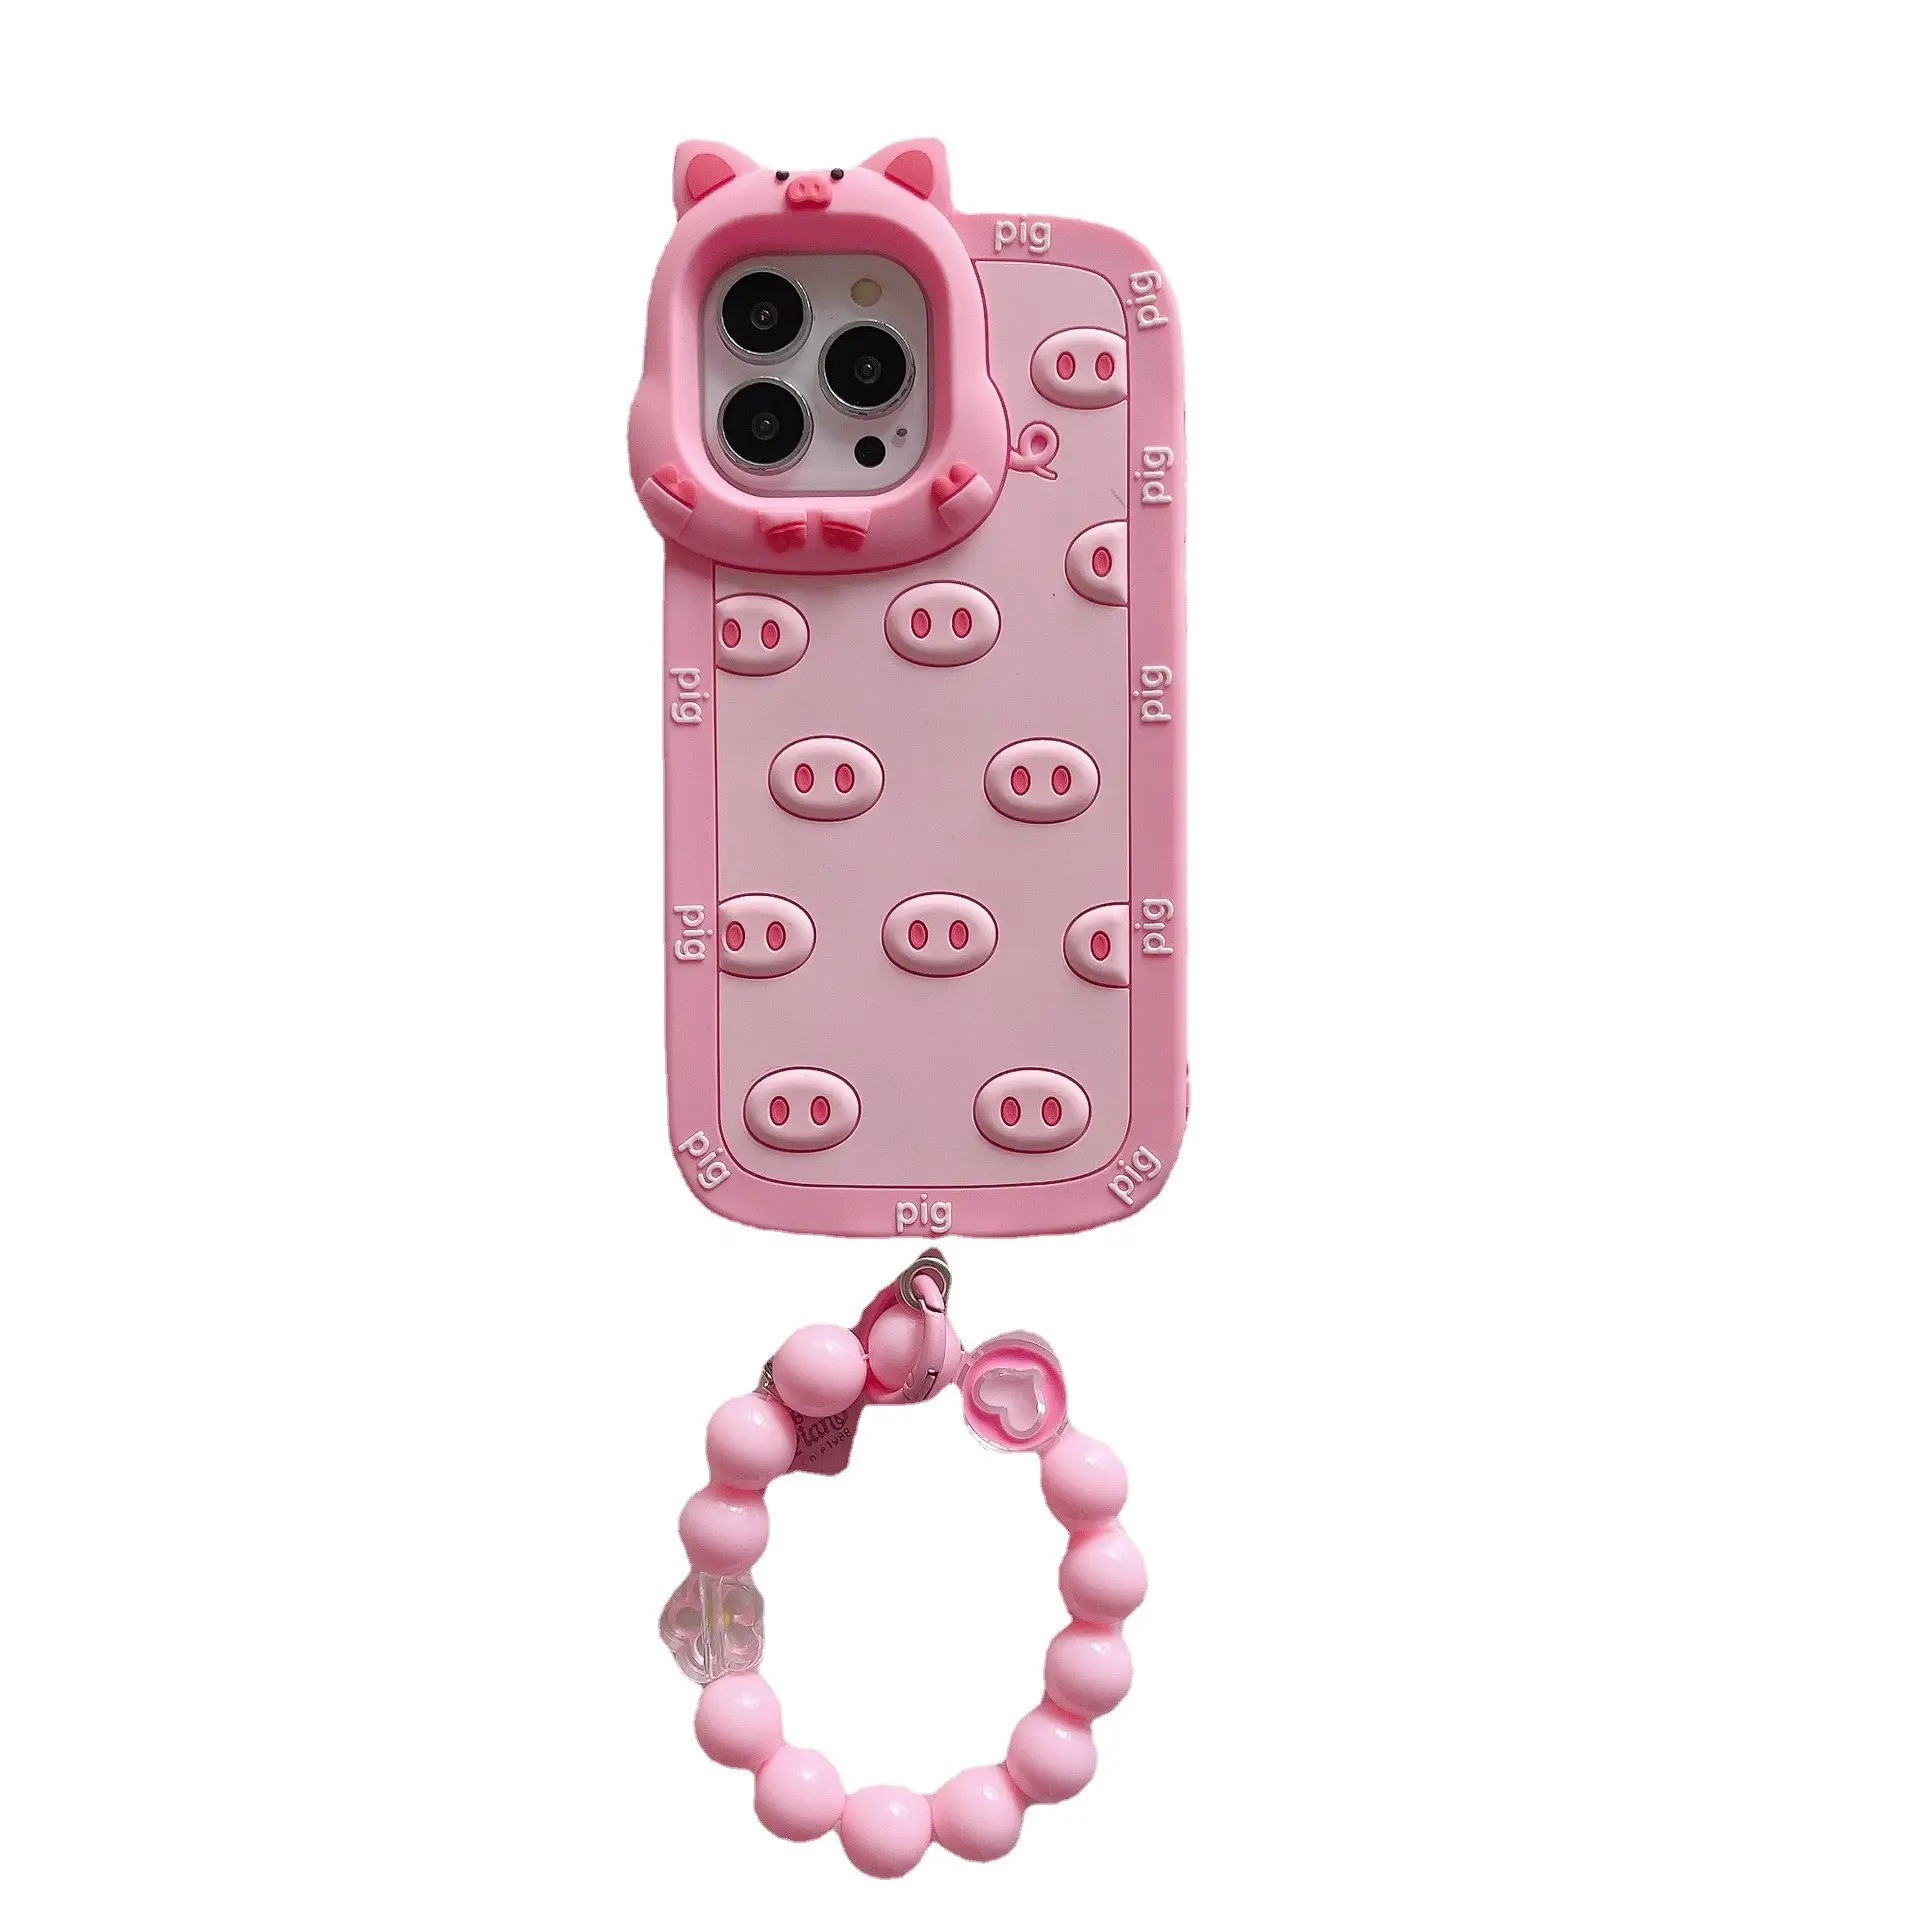 Casing ponsel silikon babi 3D lucu silikon lunak merah muda populer kartun babi lucu Bumper tahan benturan casing penutup belakang untuk iPhone14 13 12 11